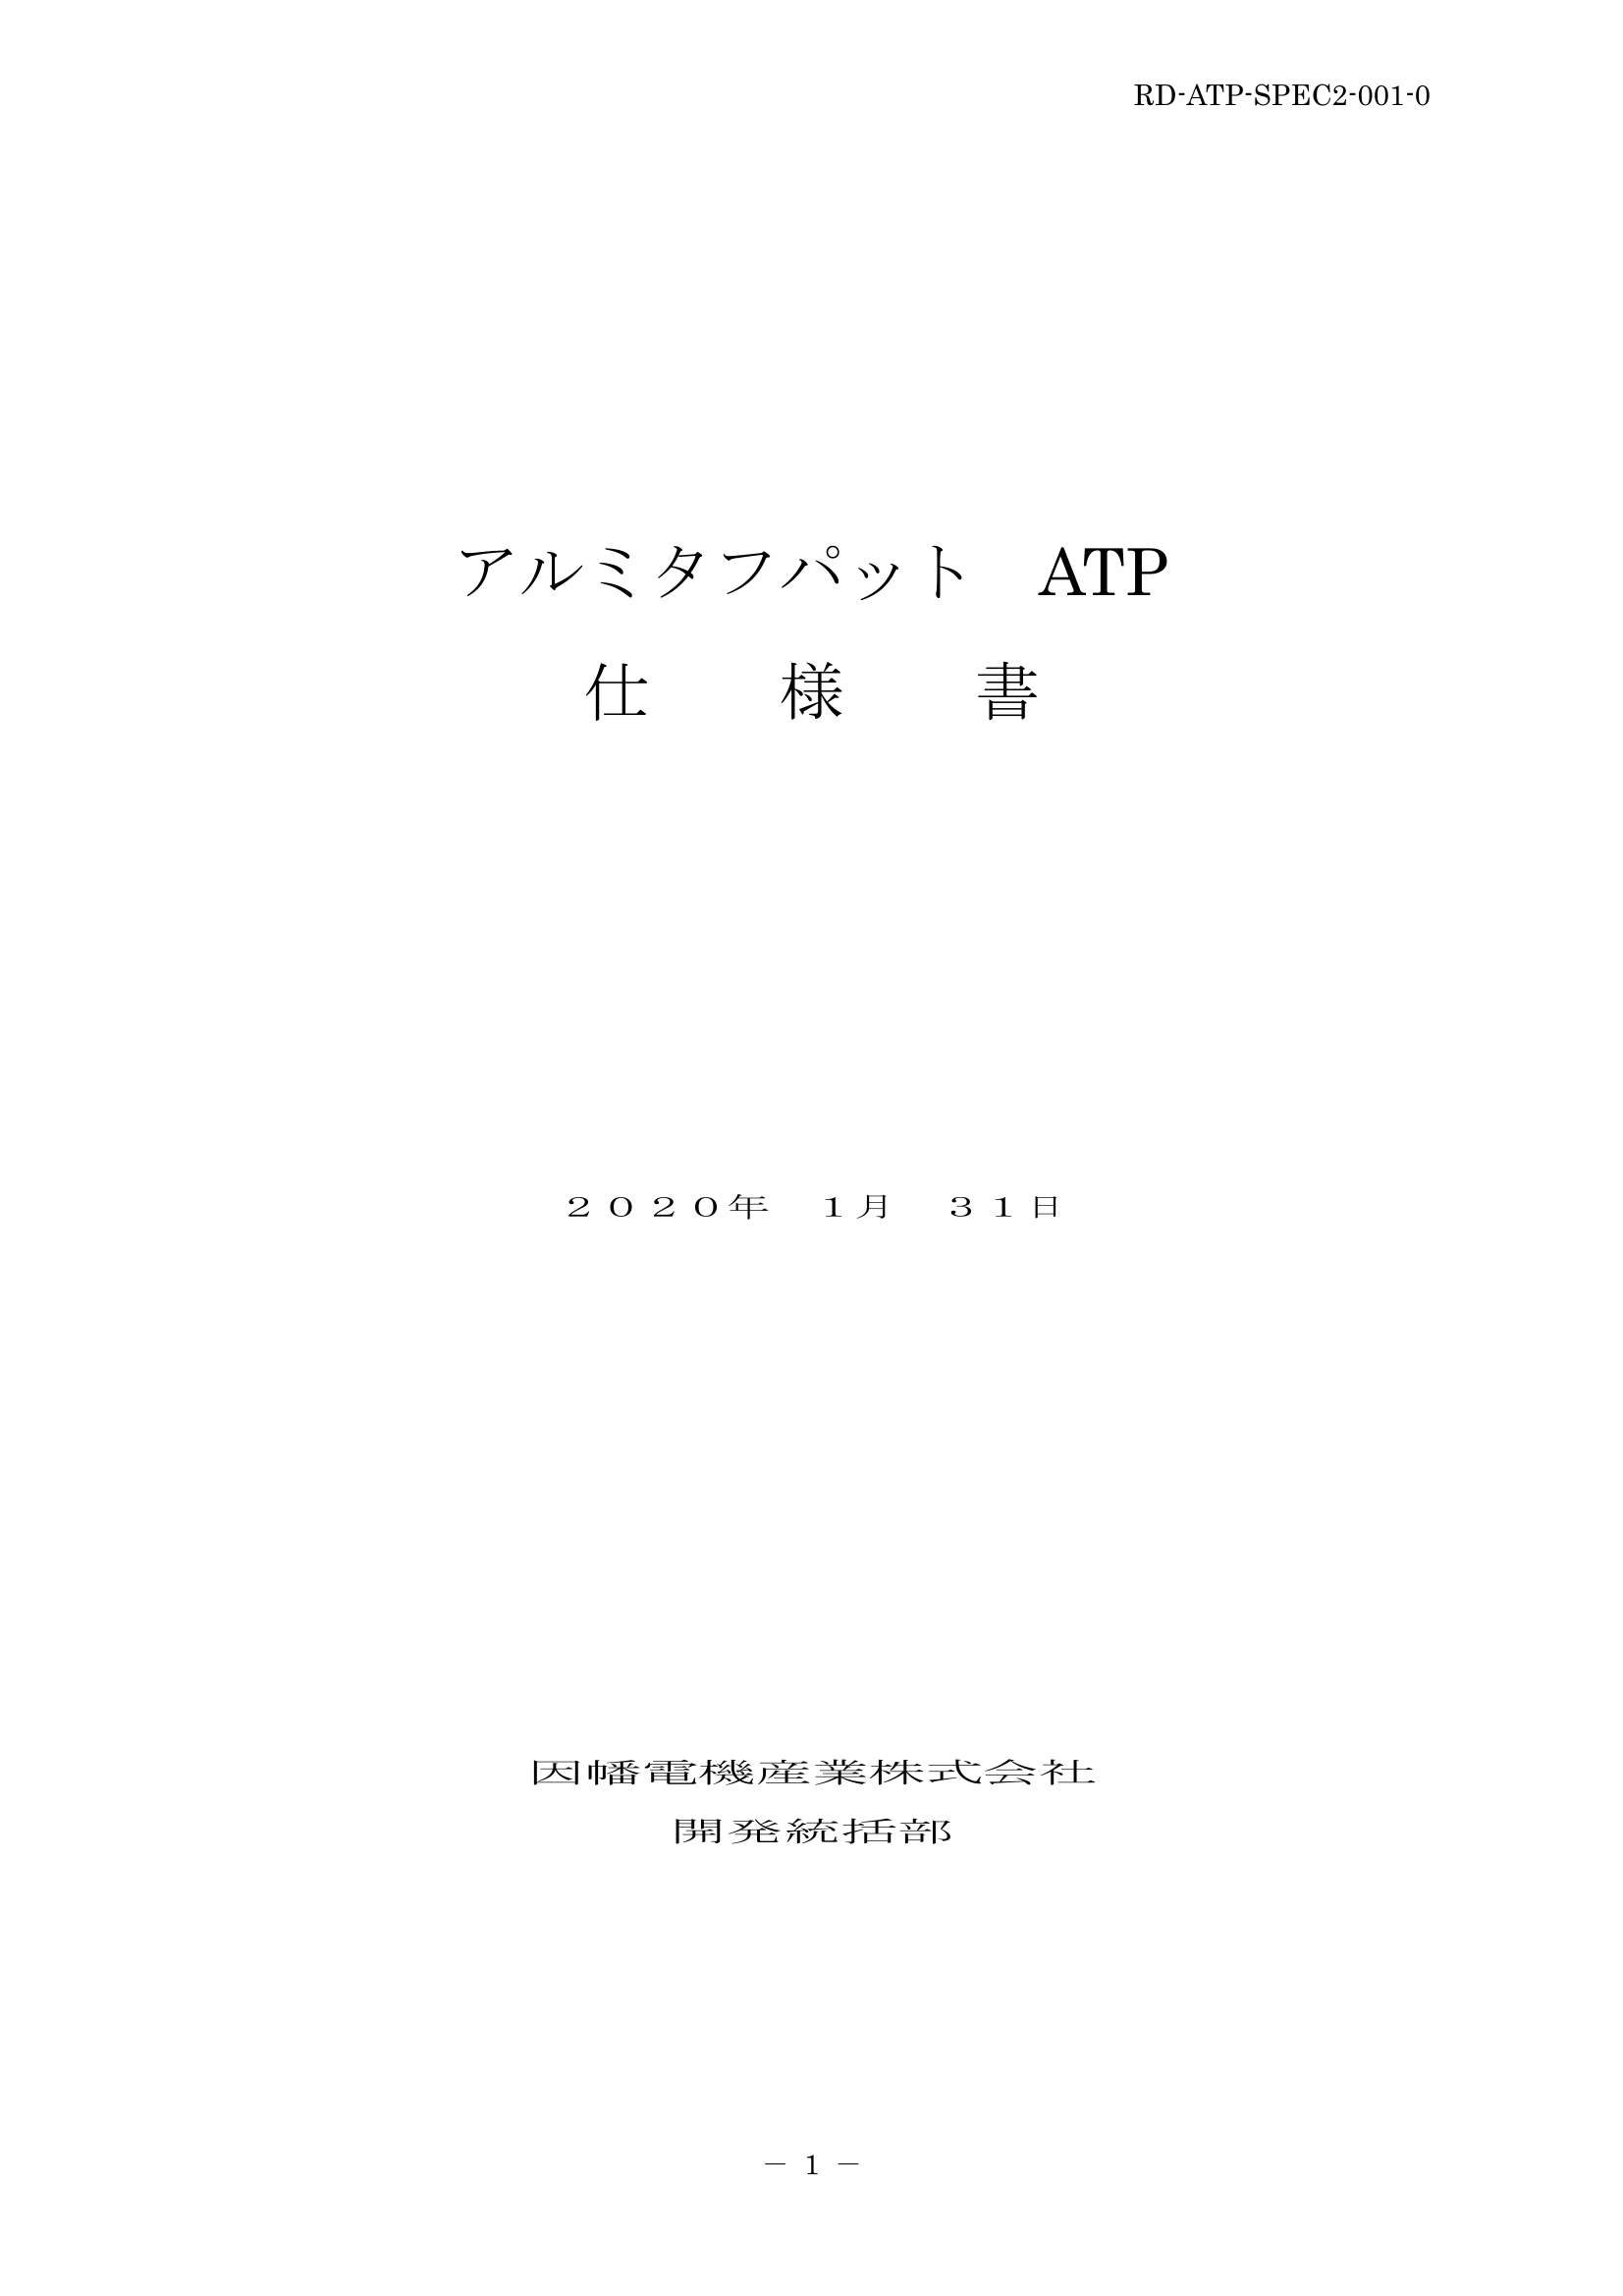 ATP_仕様書_20200131.pdf